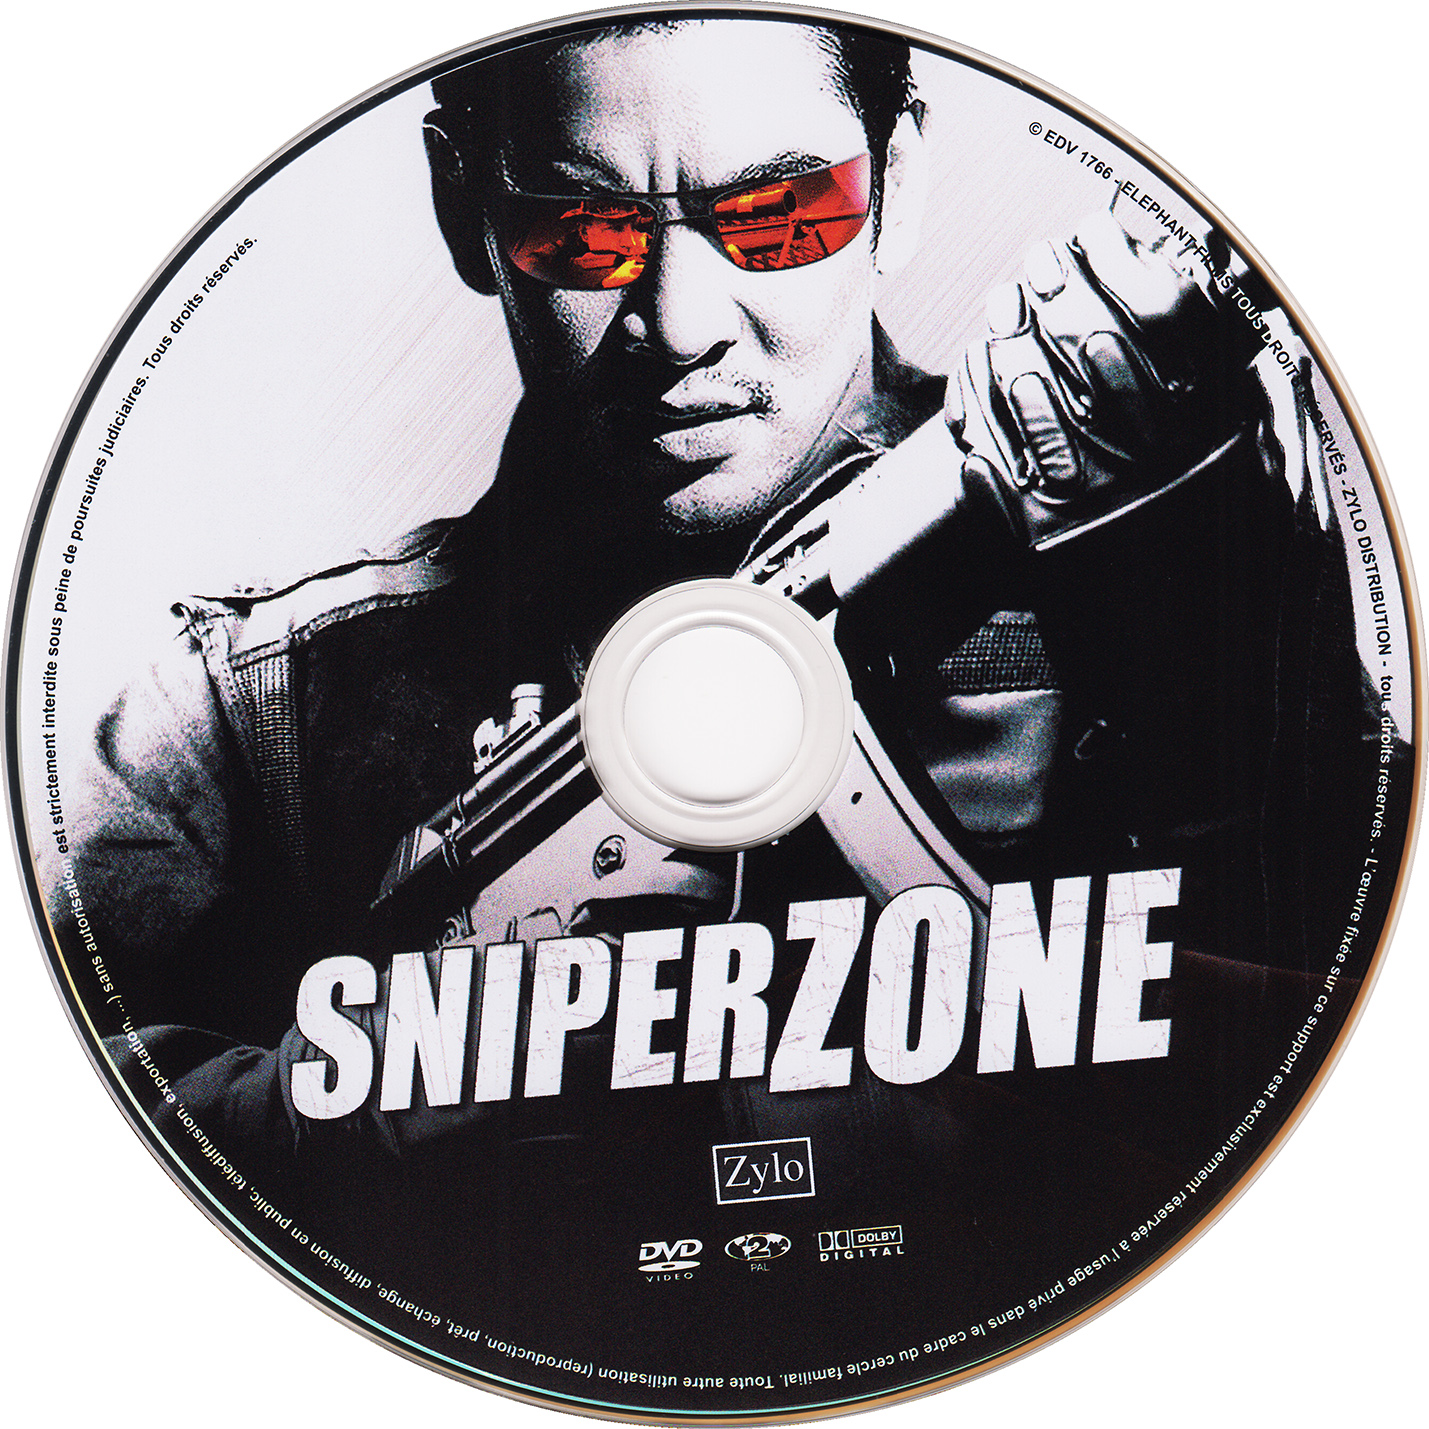 Sniperzone